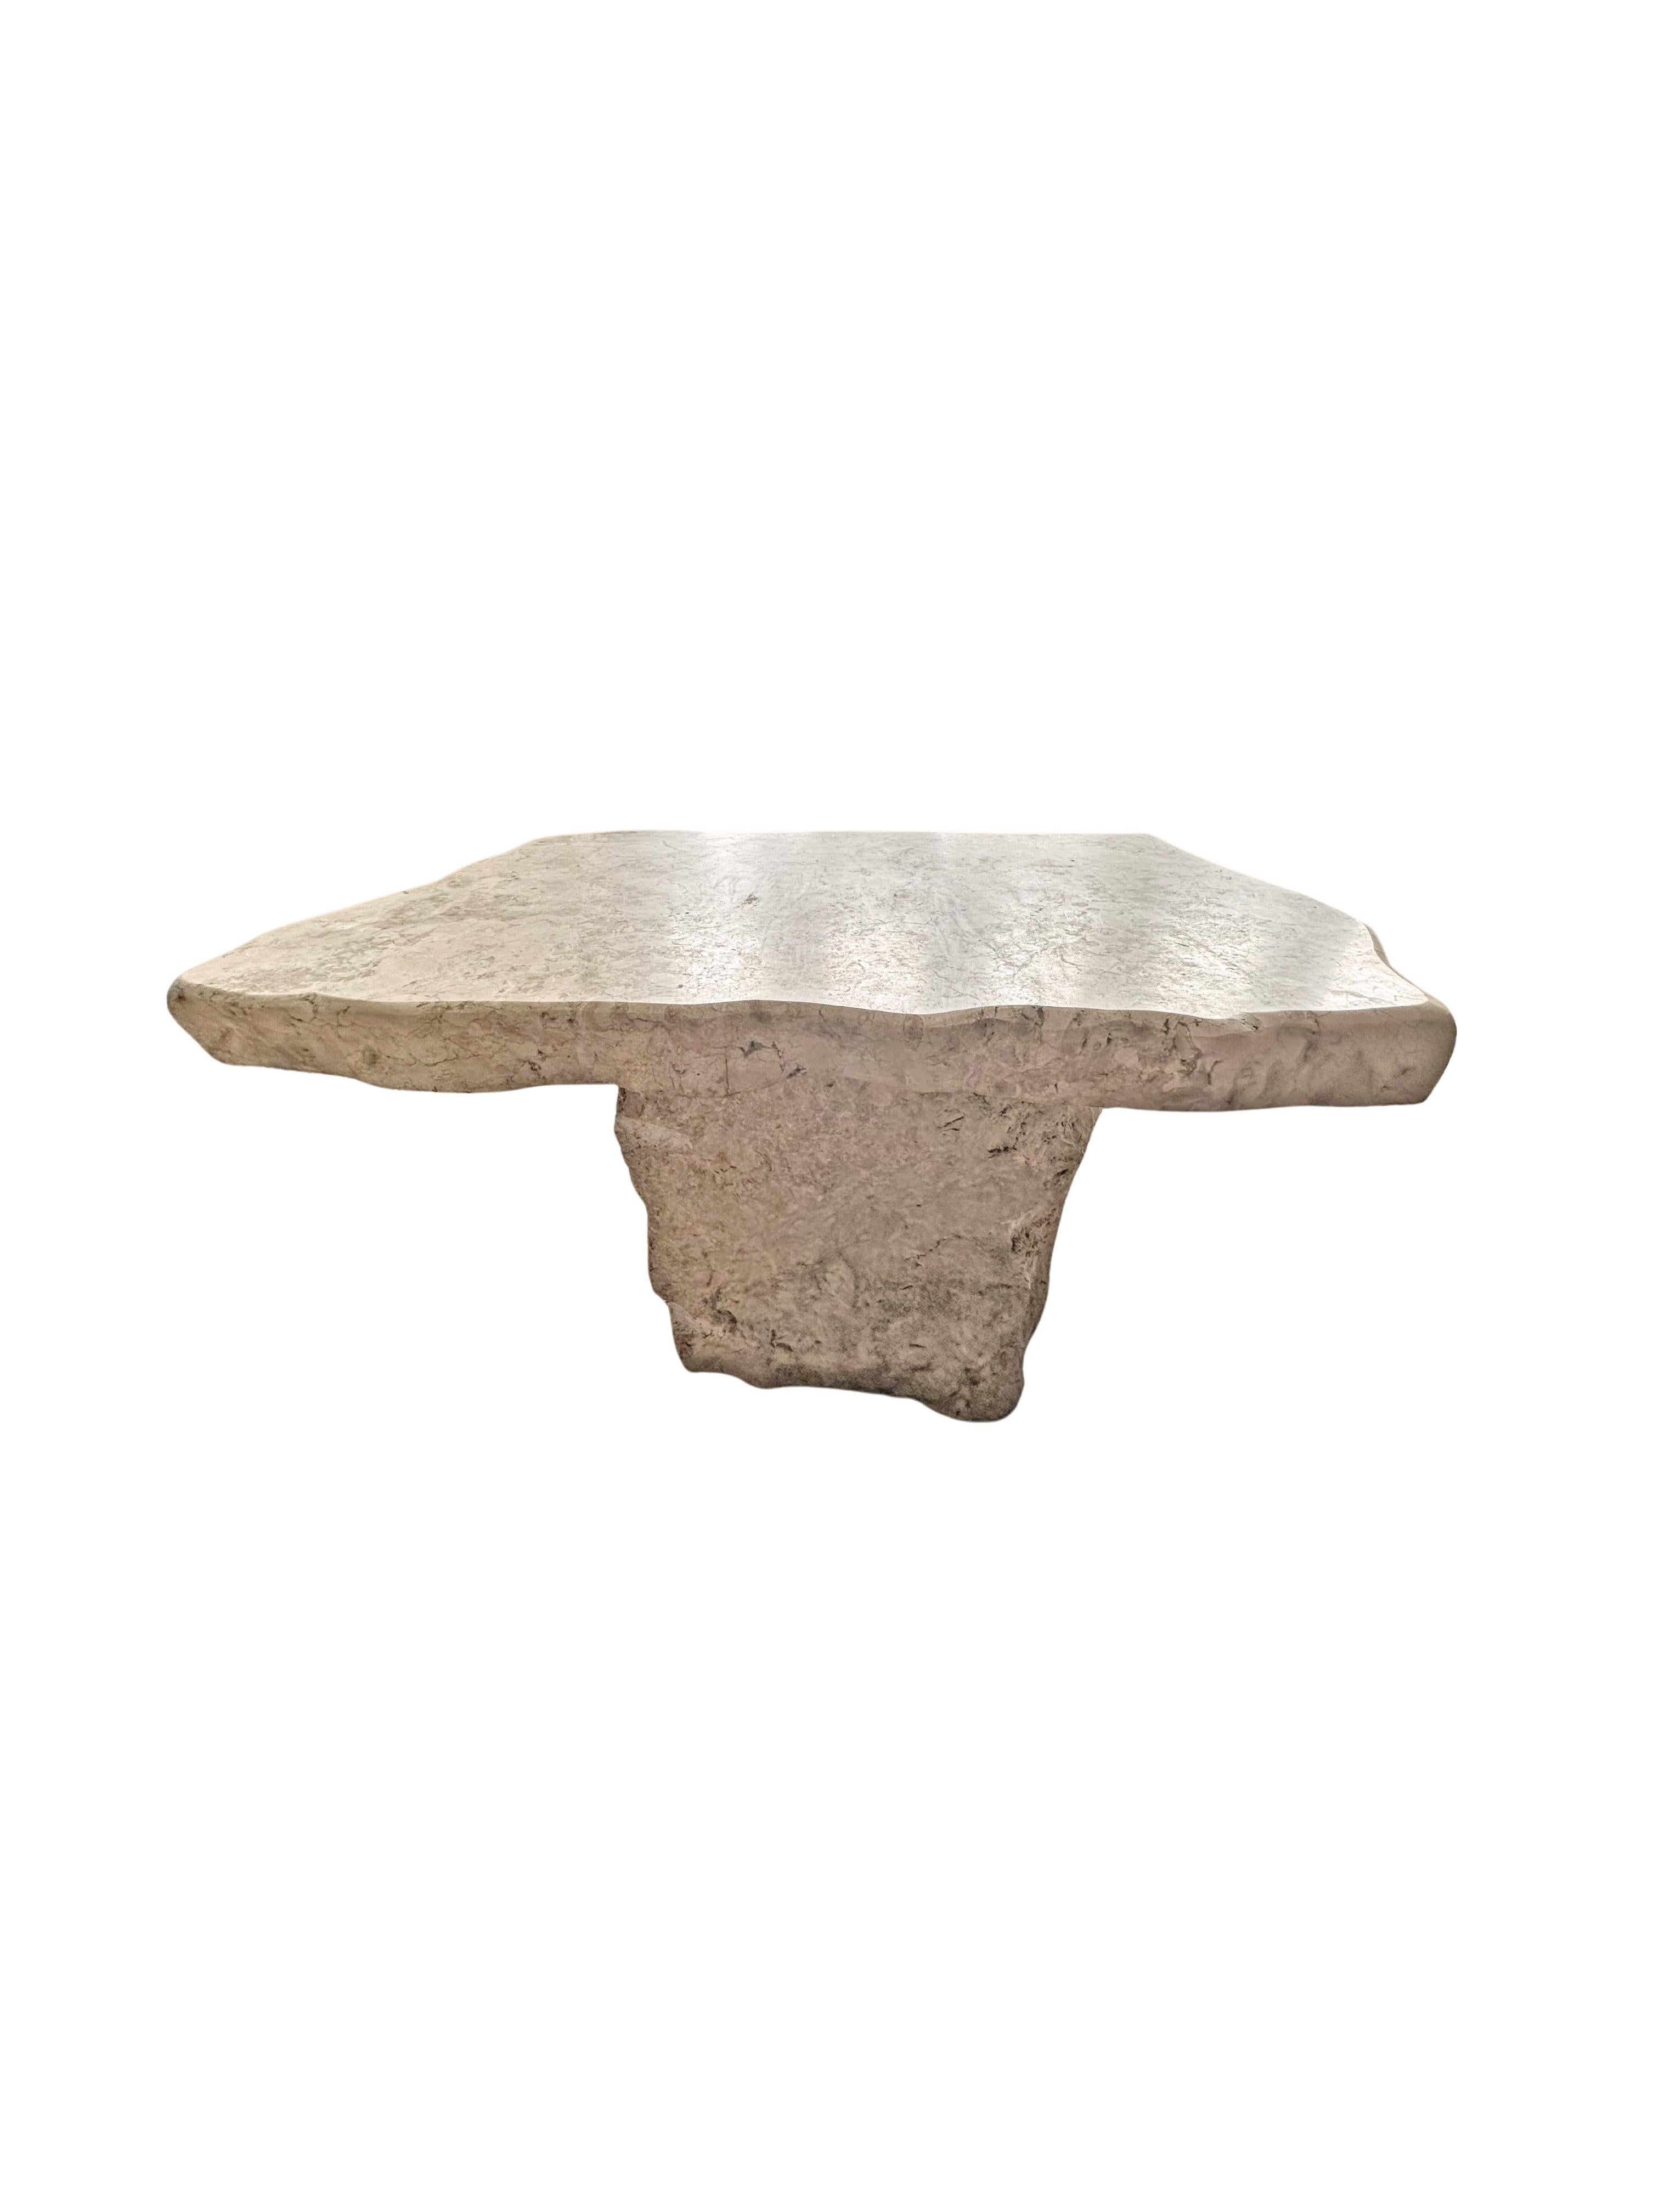 Sculptural Marble Table, Modern Organic 2